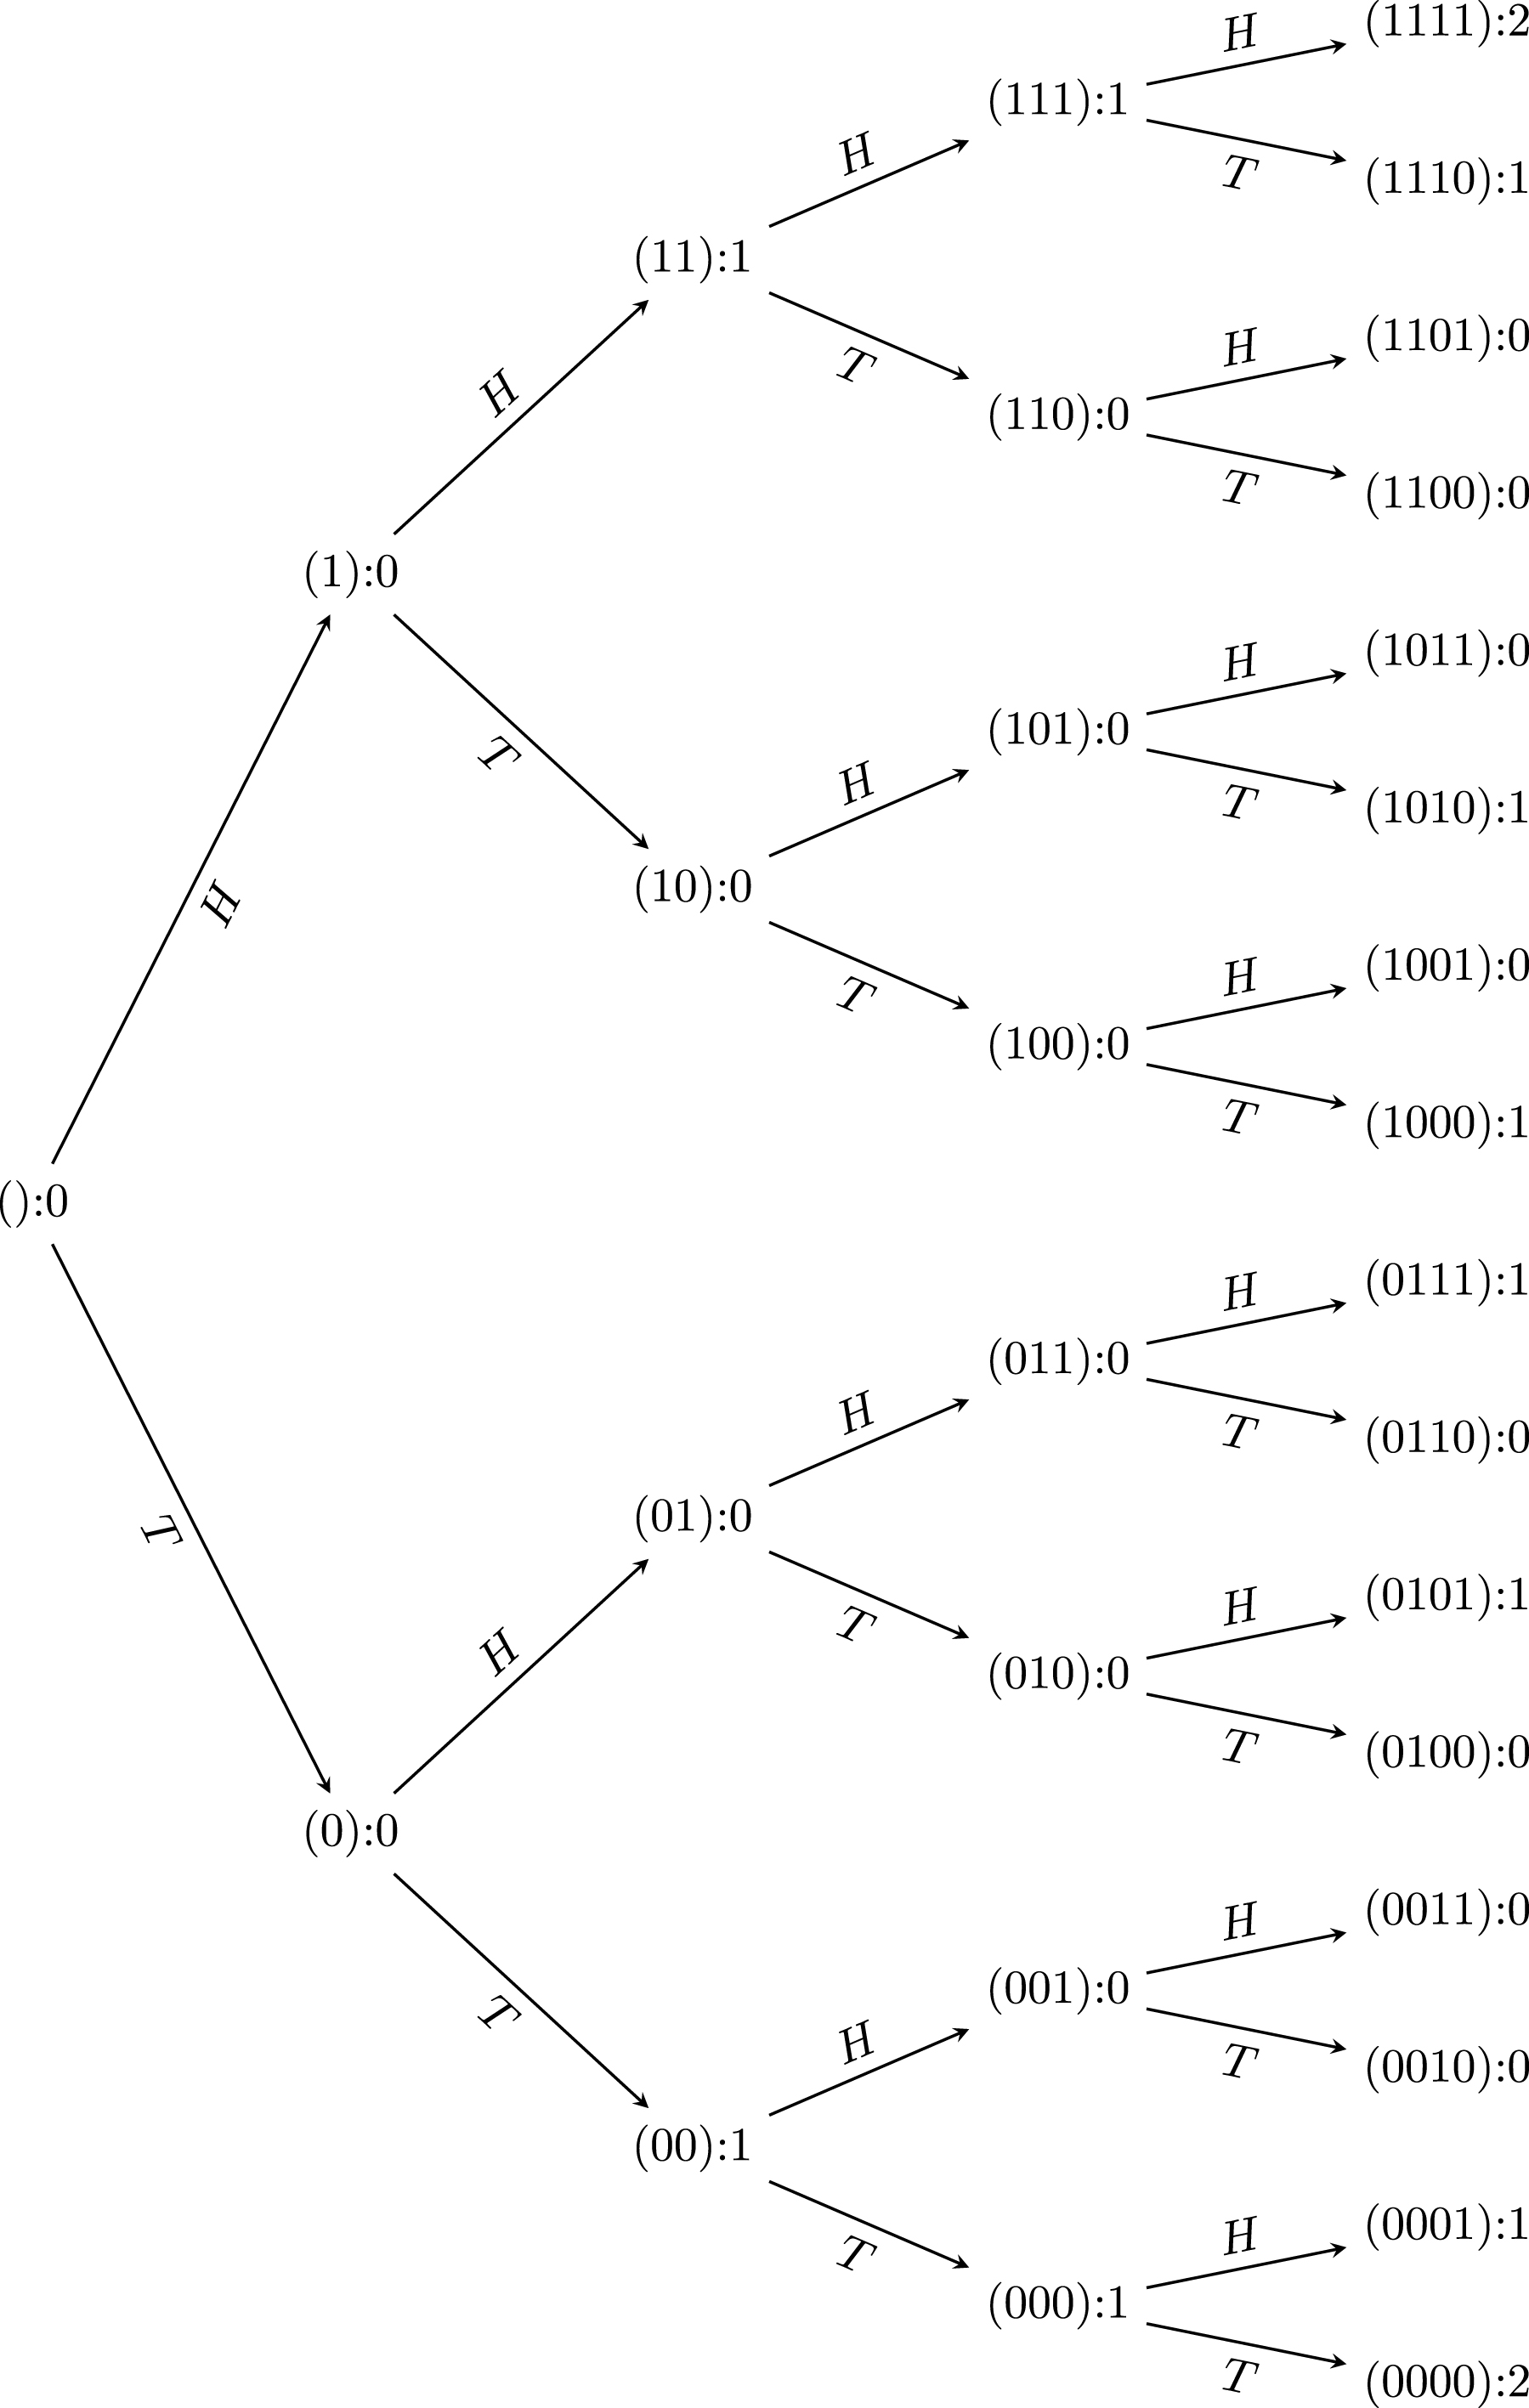 Deficiency tree for n = 4, see Remark 16.